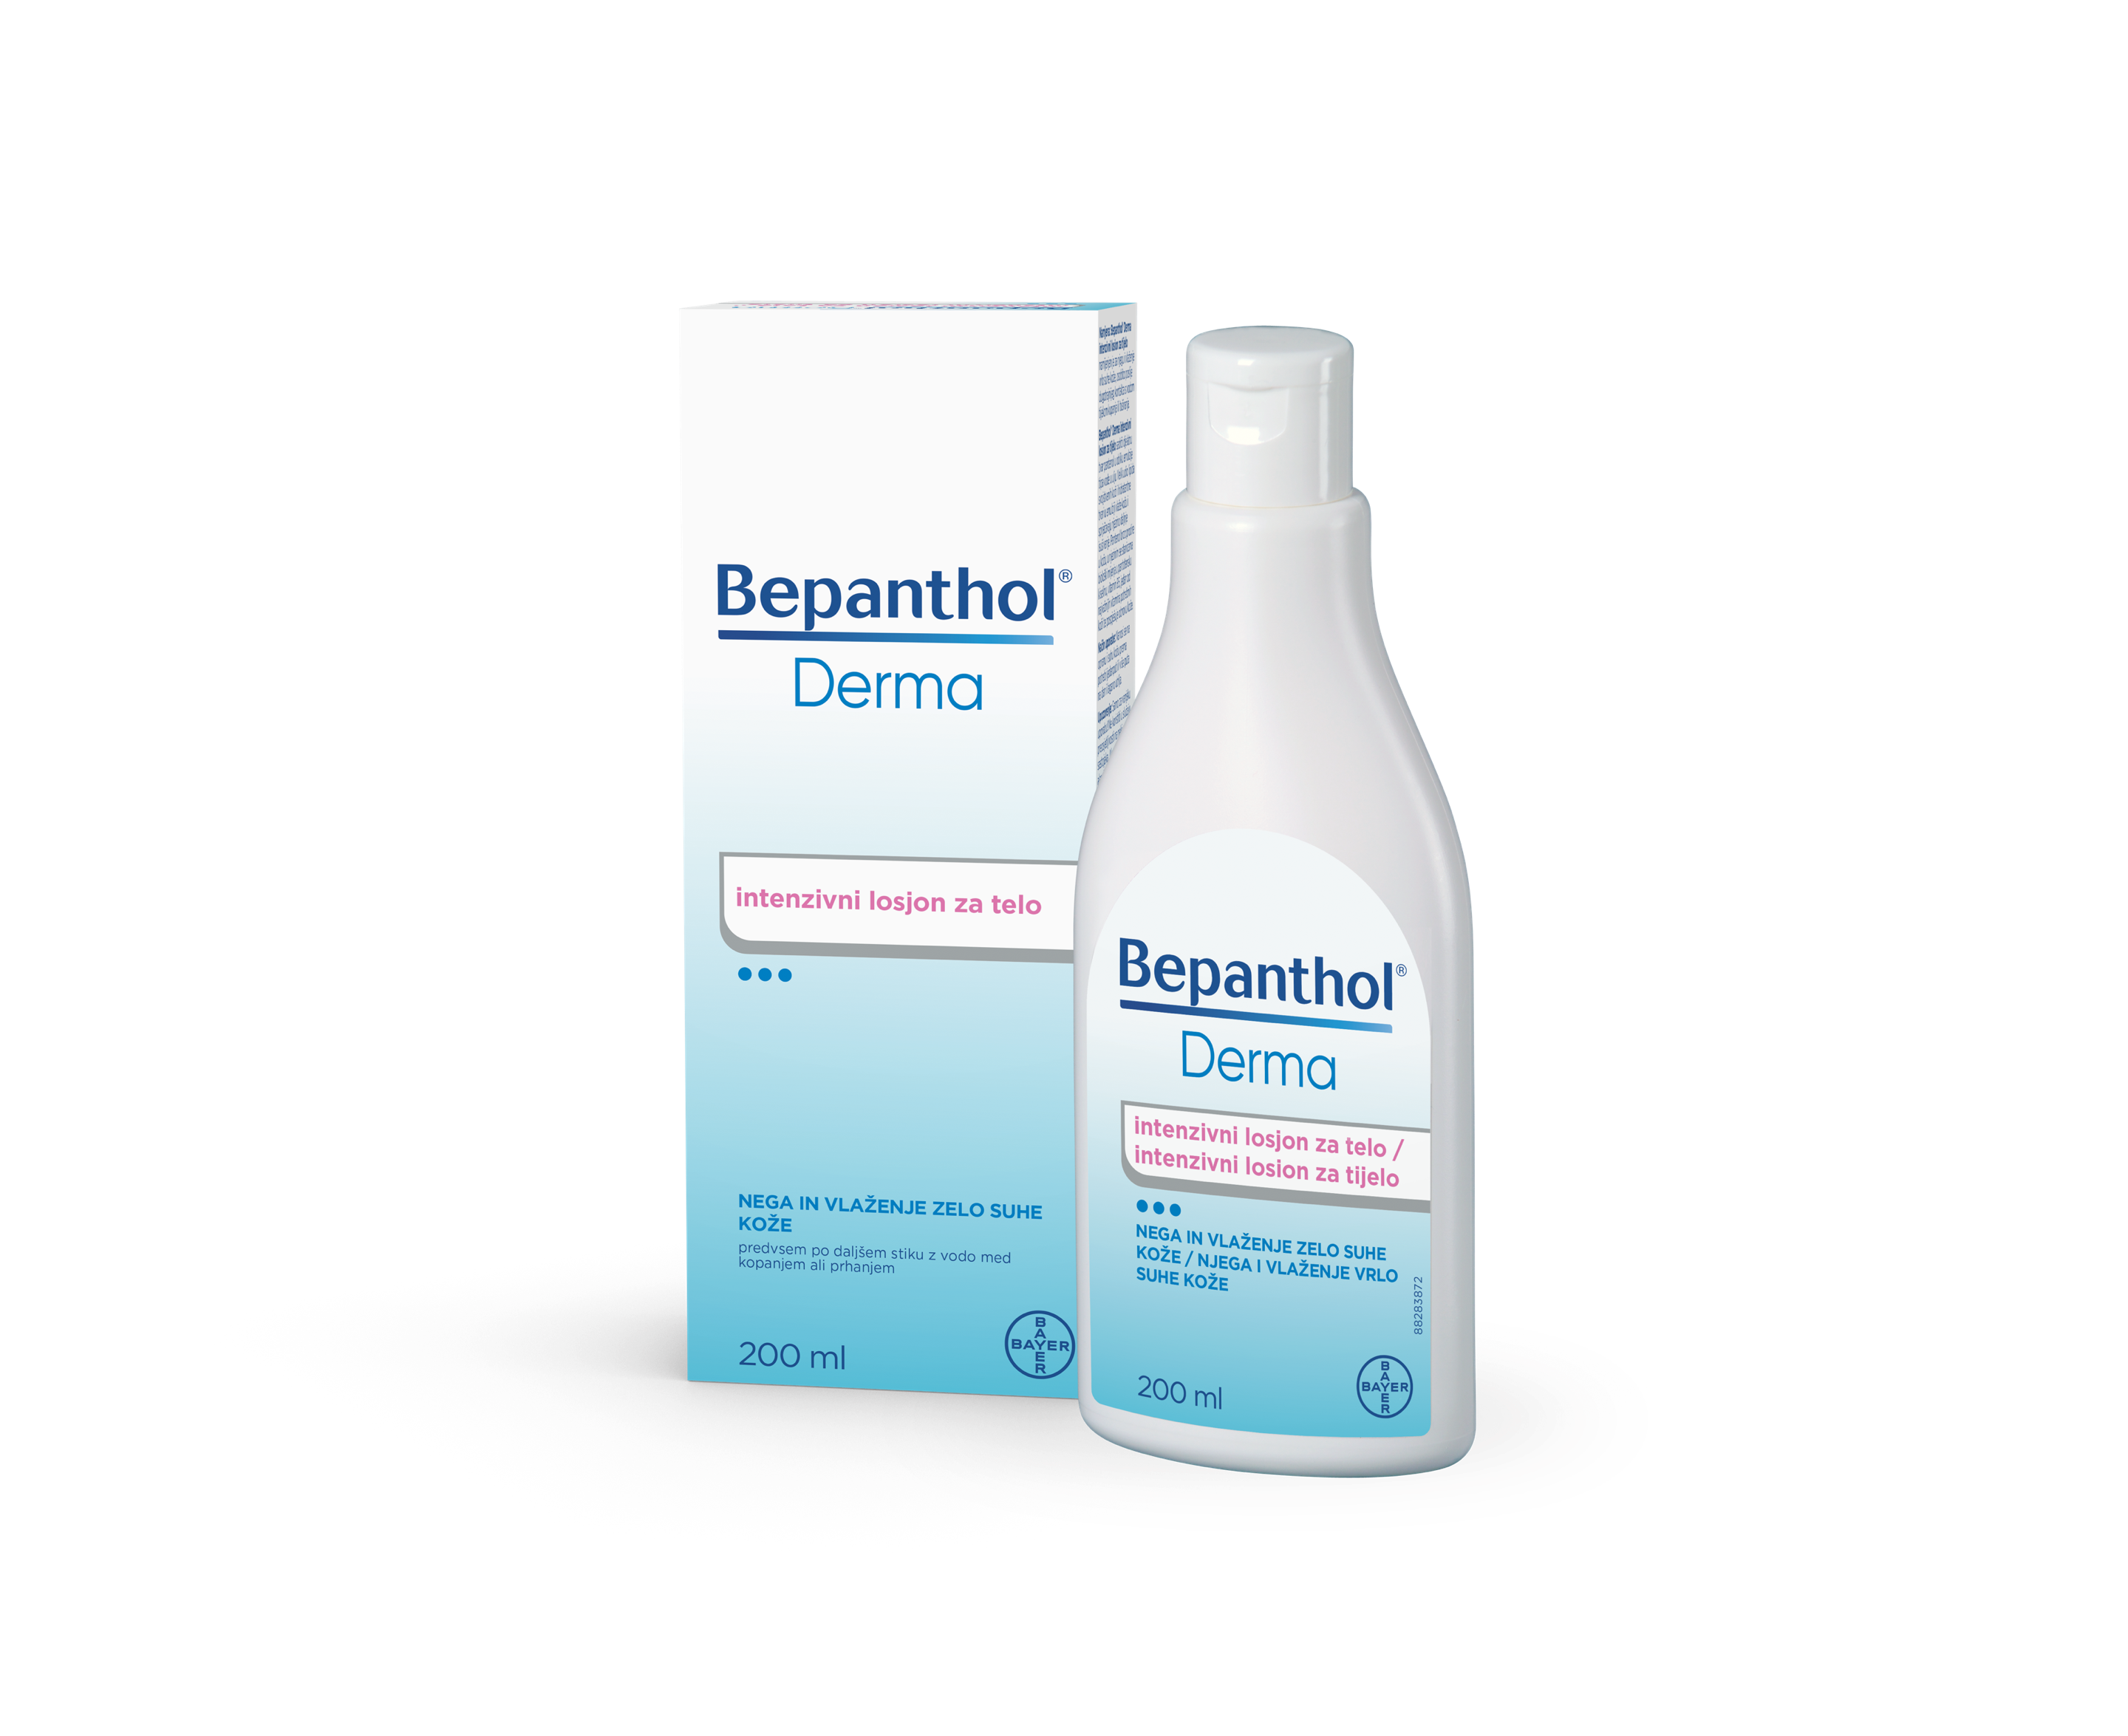 Bepanthol body intenzivni losion za tijelo, 200 ml.